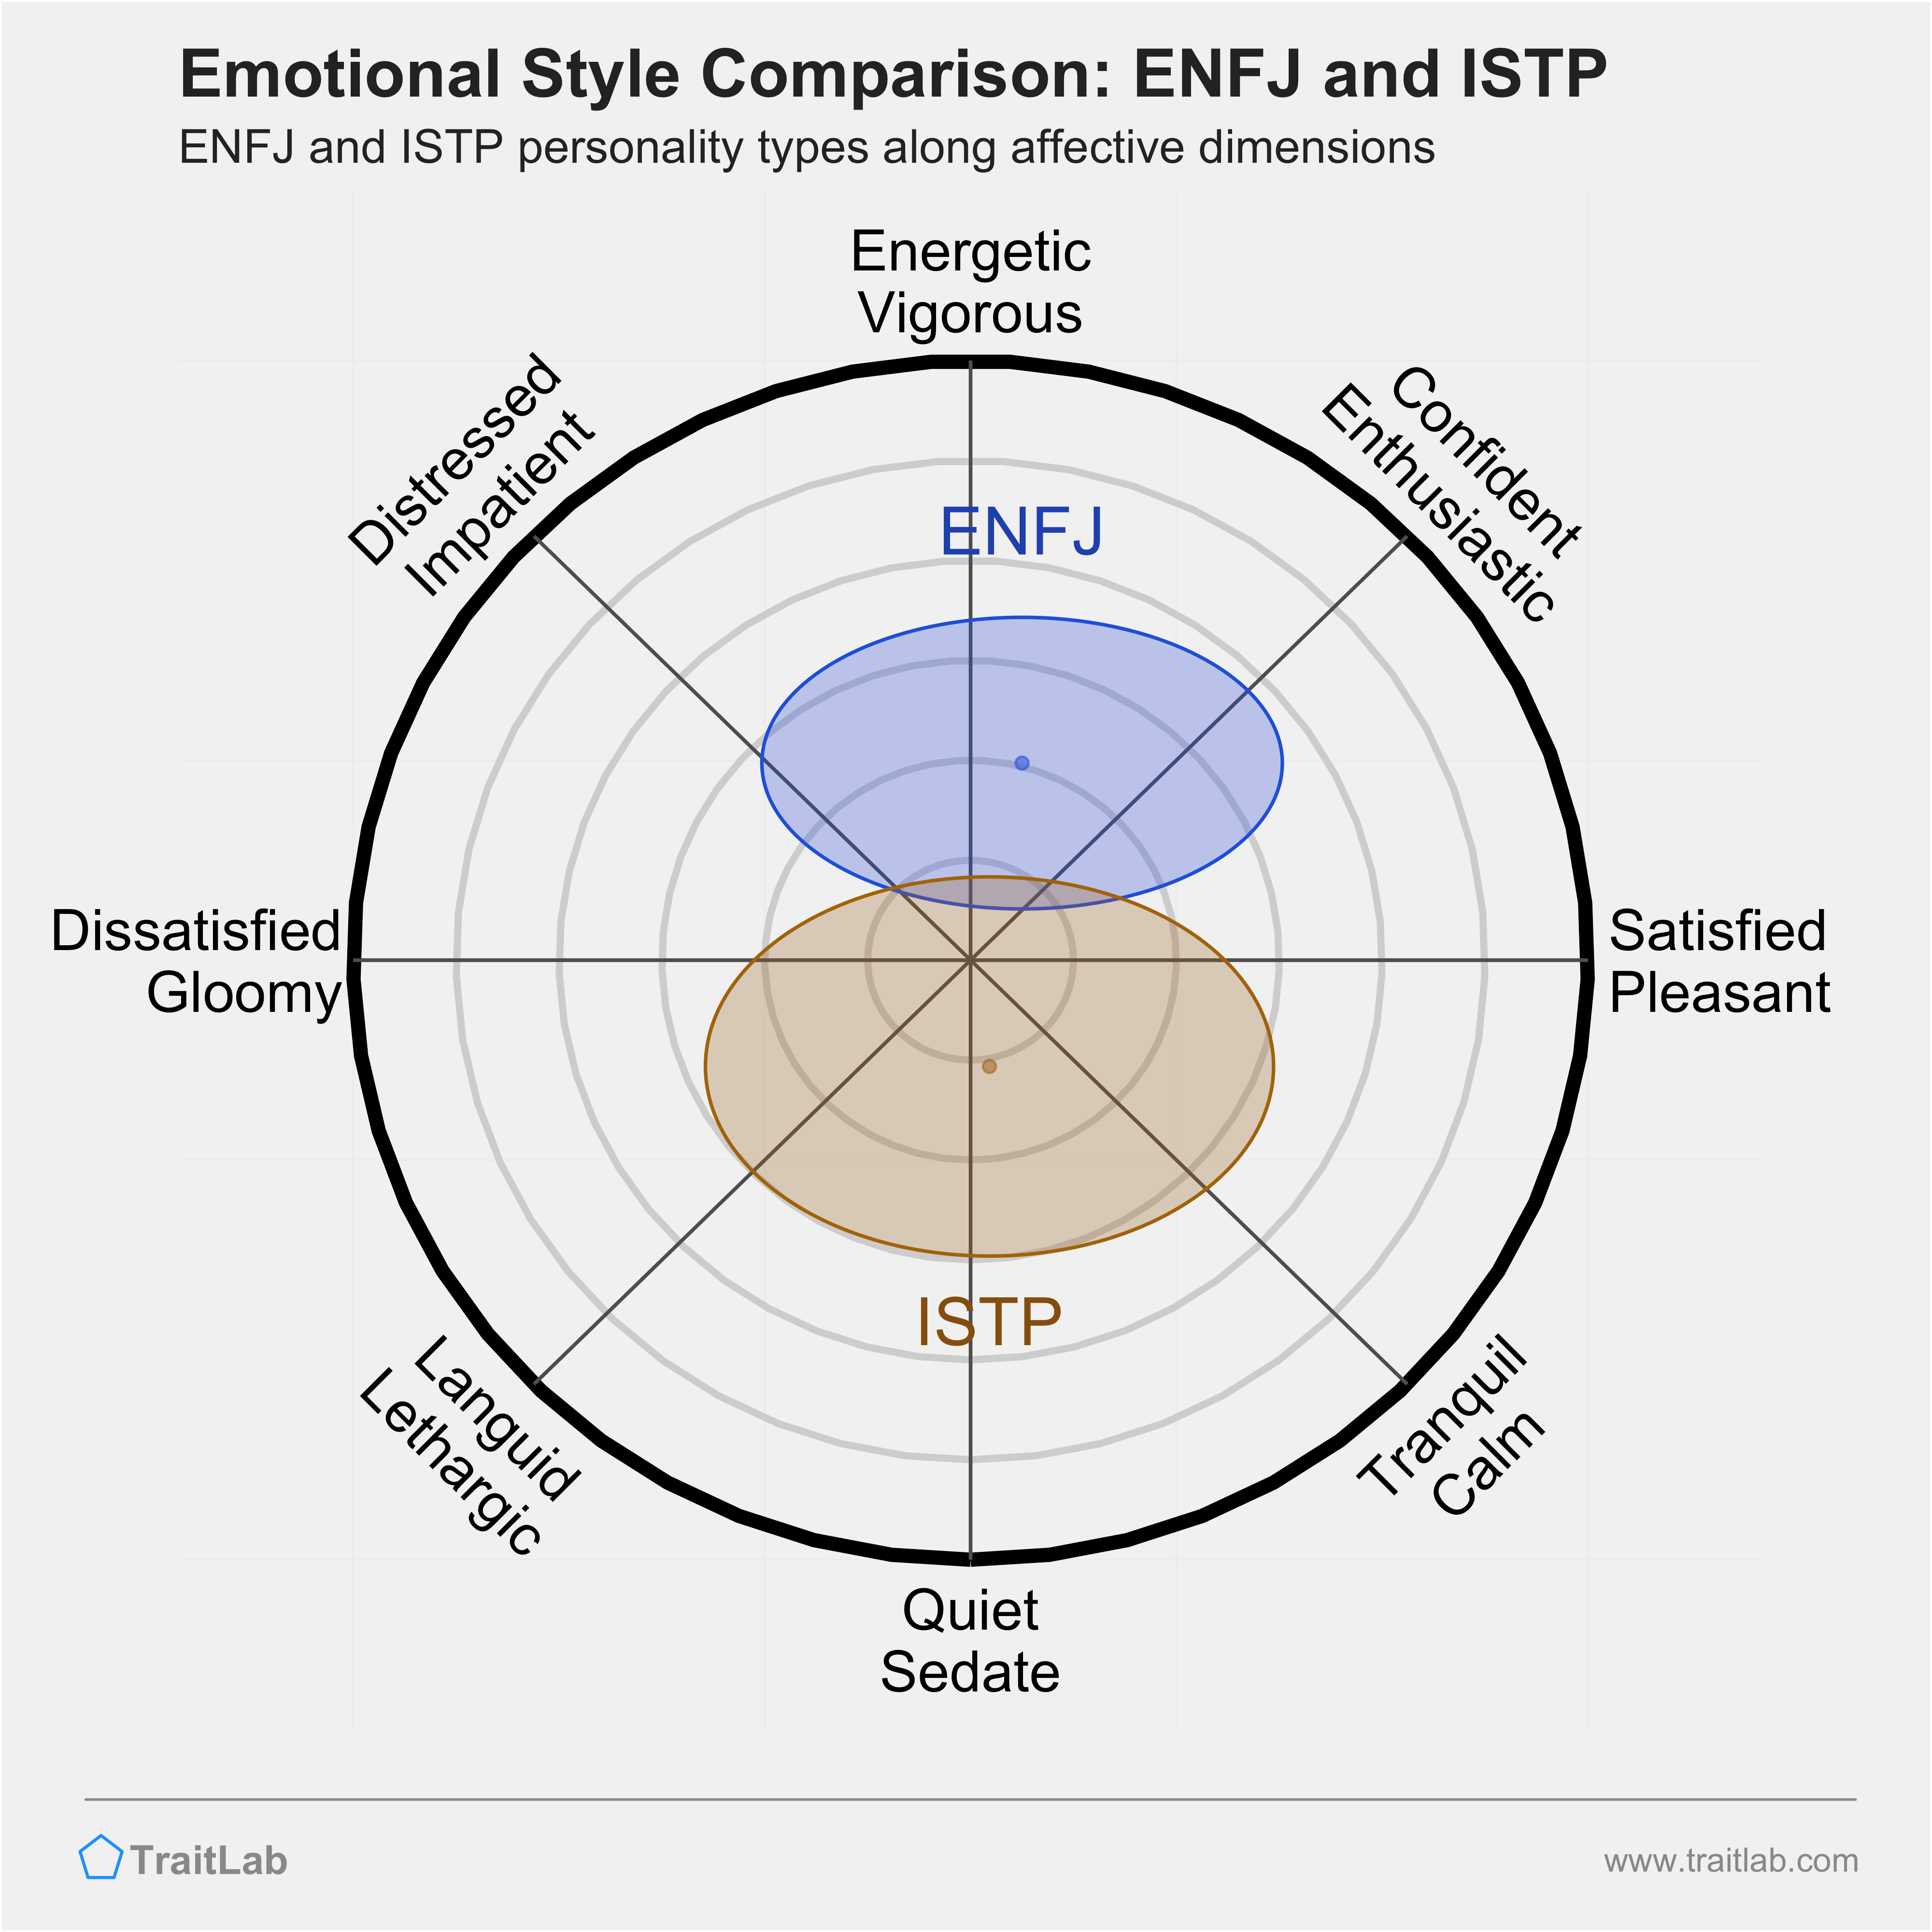 ENFJ and ISTP comparison across emotional (affective) dimensions